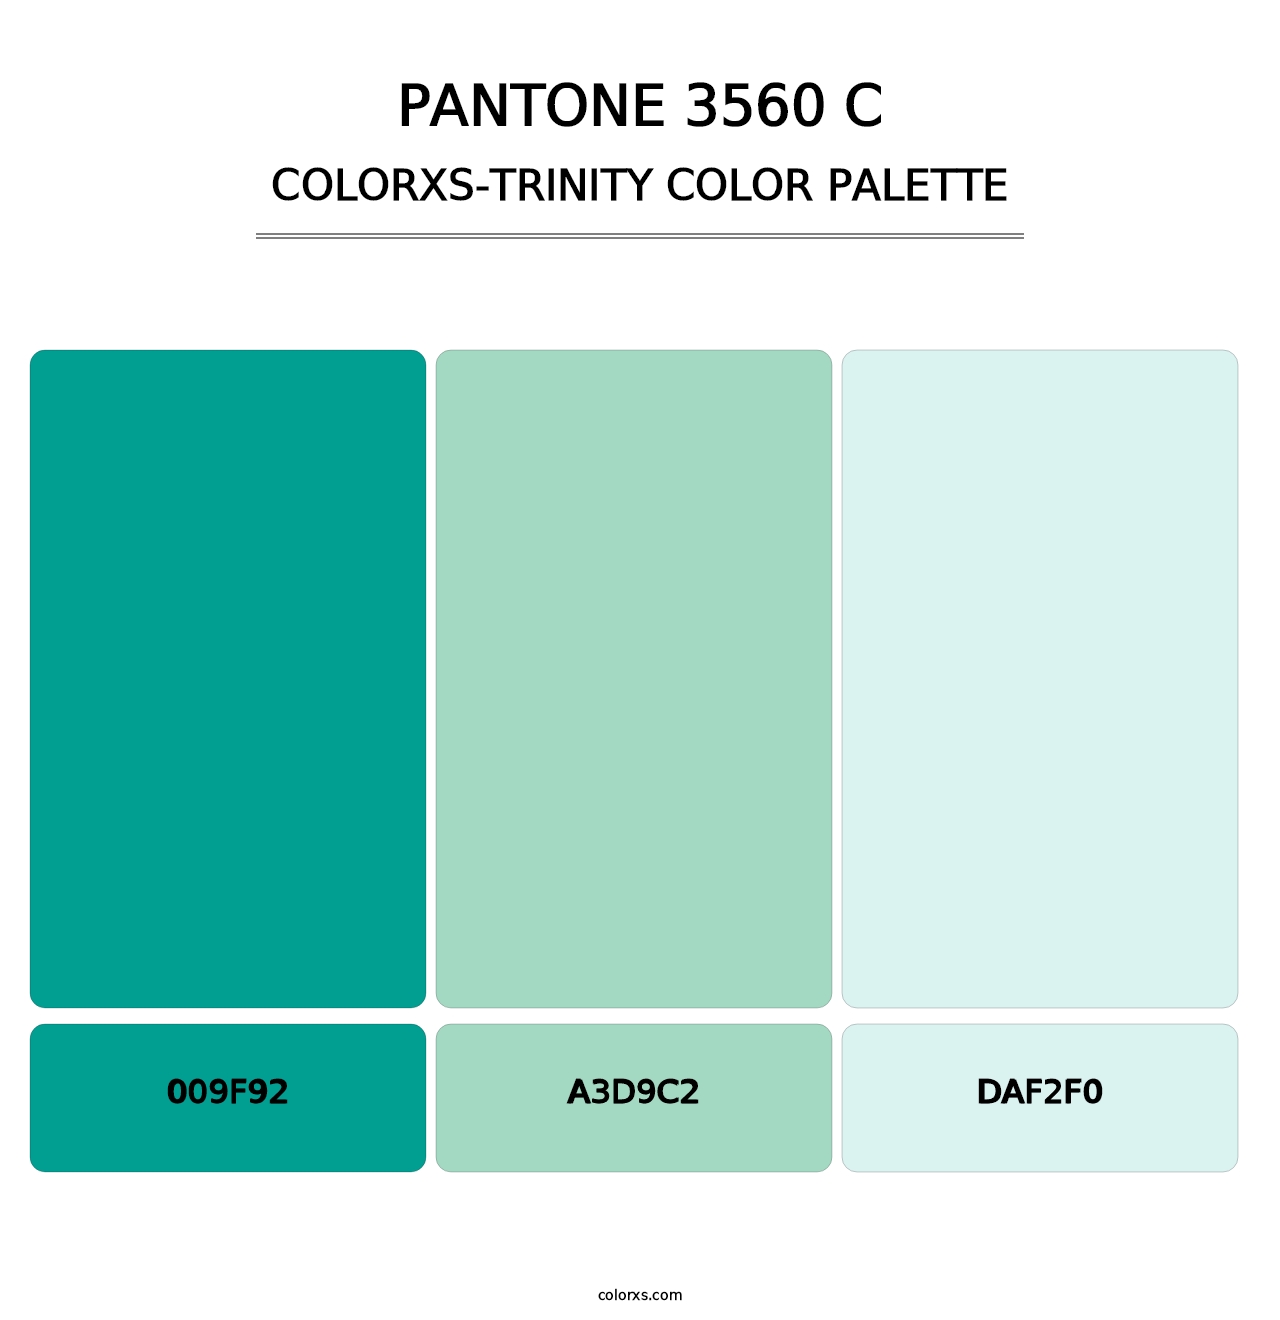 PANTONE 3560 C - Colorxs Trinity Palette